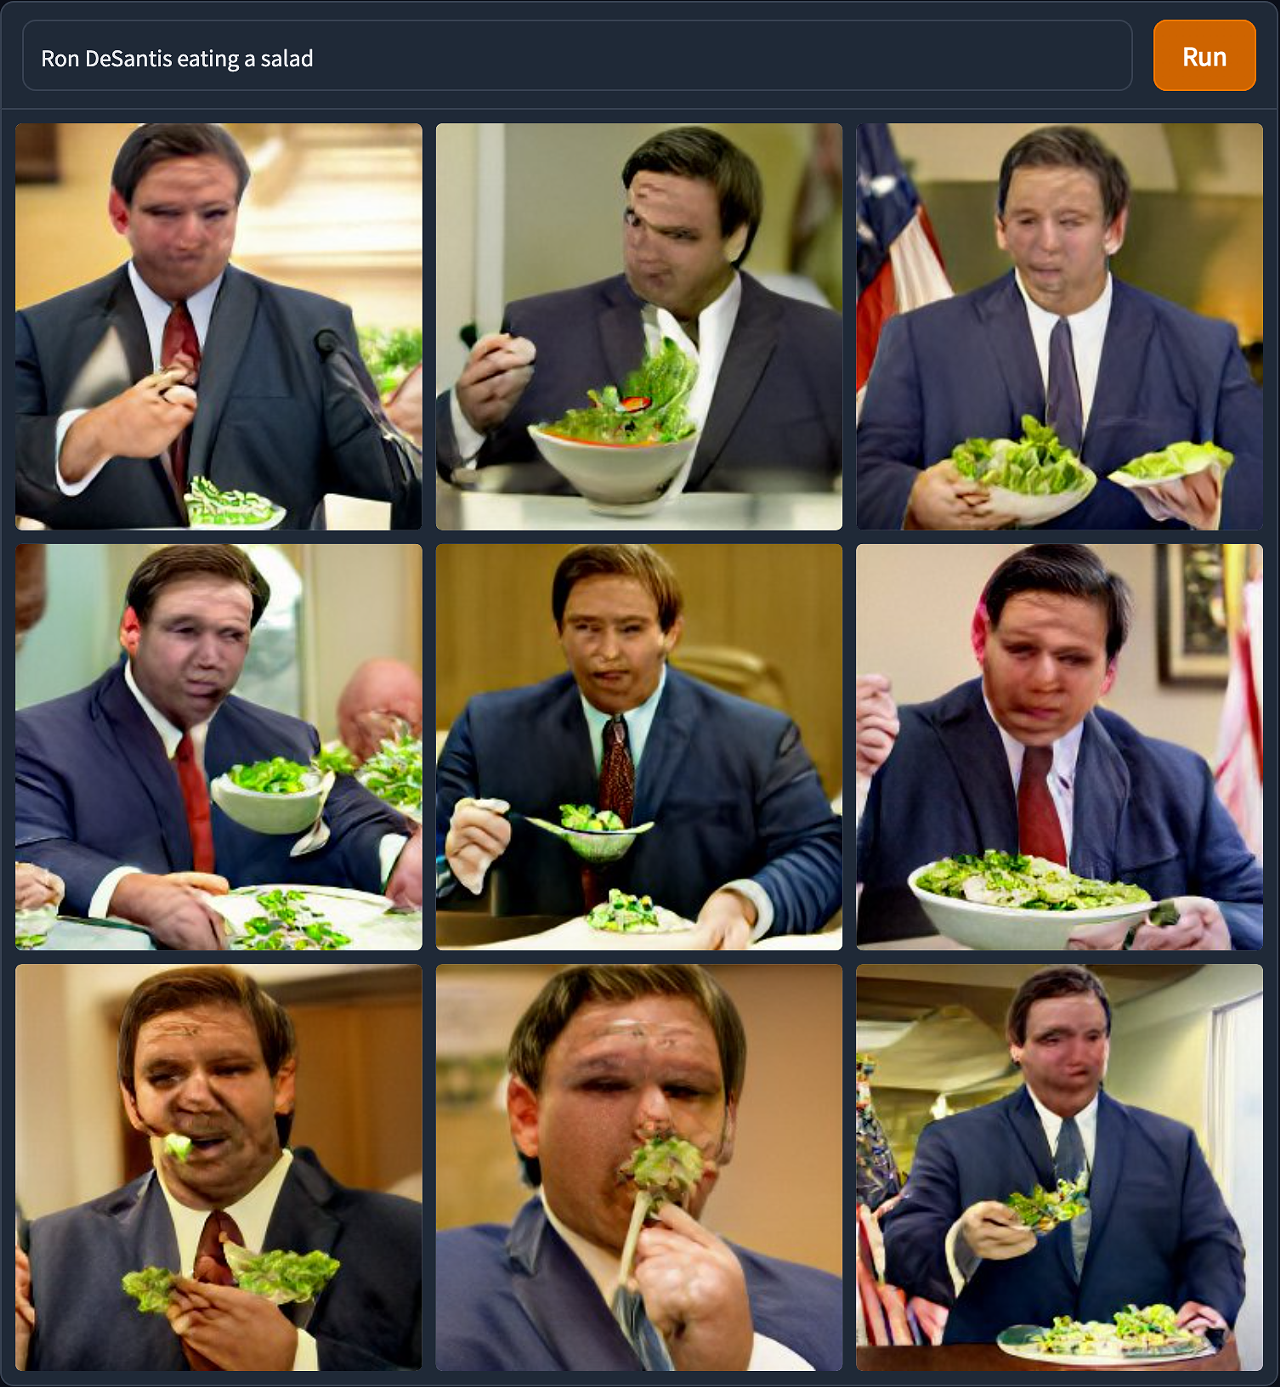 Ron DeSantis eating a salad